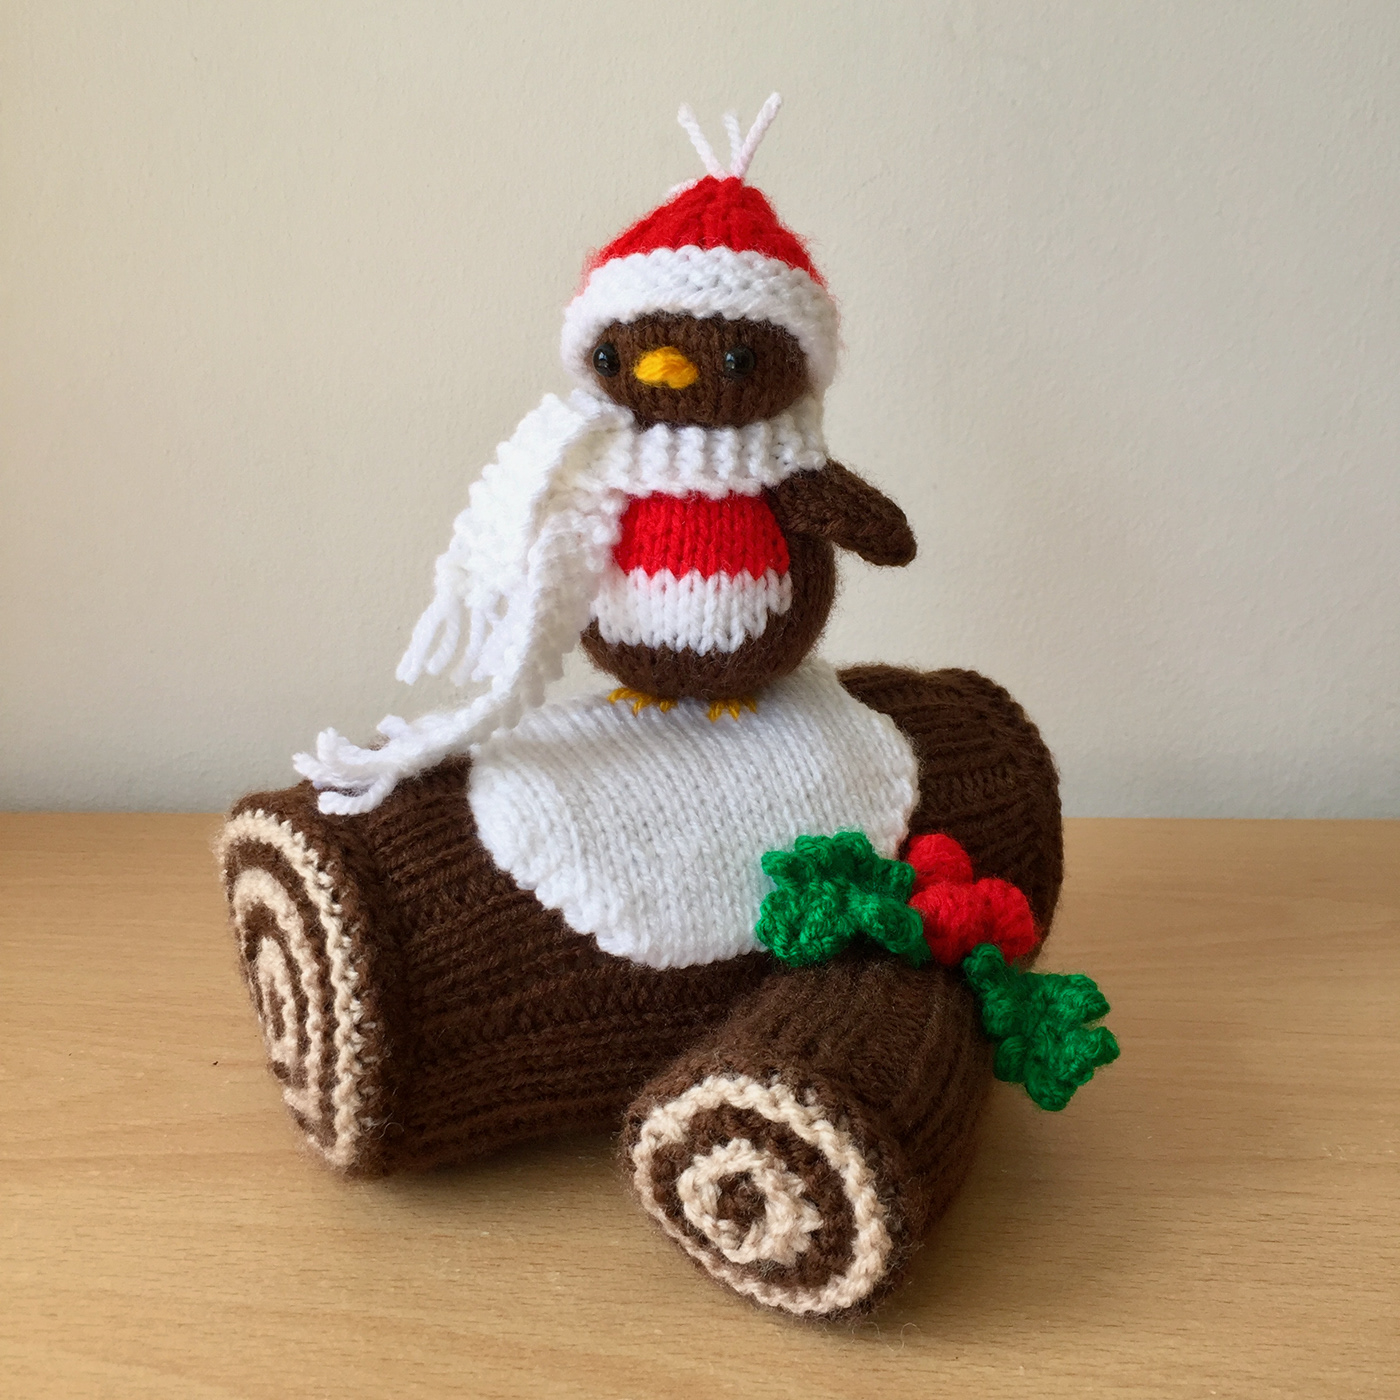 Christmas crafting decorations festive handmade knitted toy design knitting knitting pattern design robin yule log